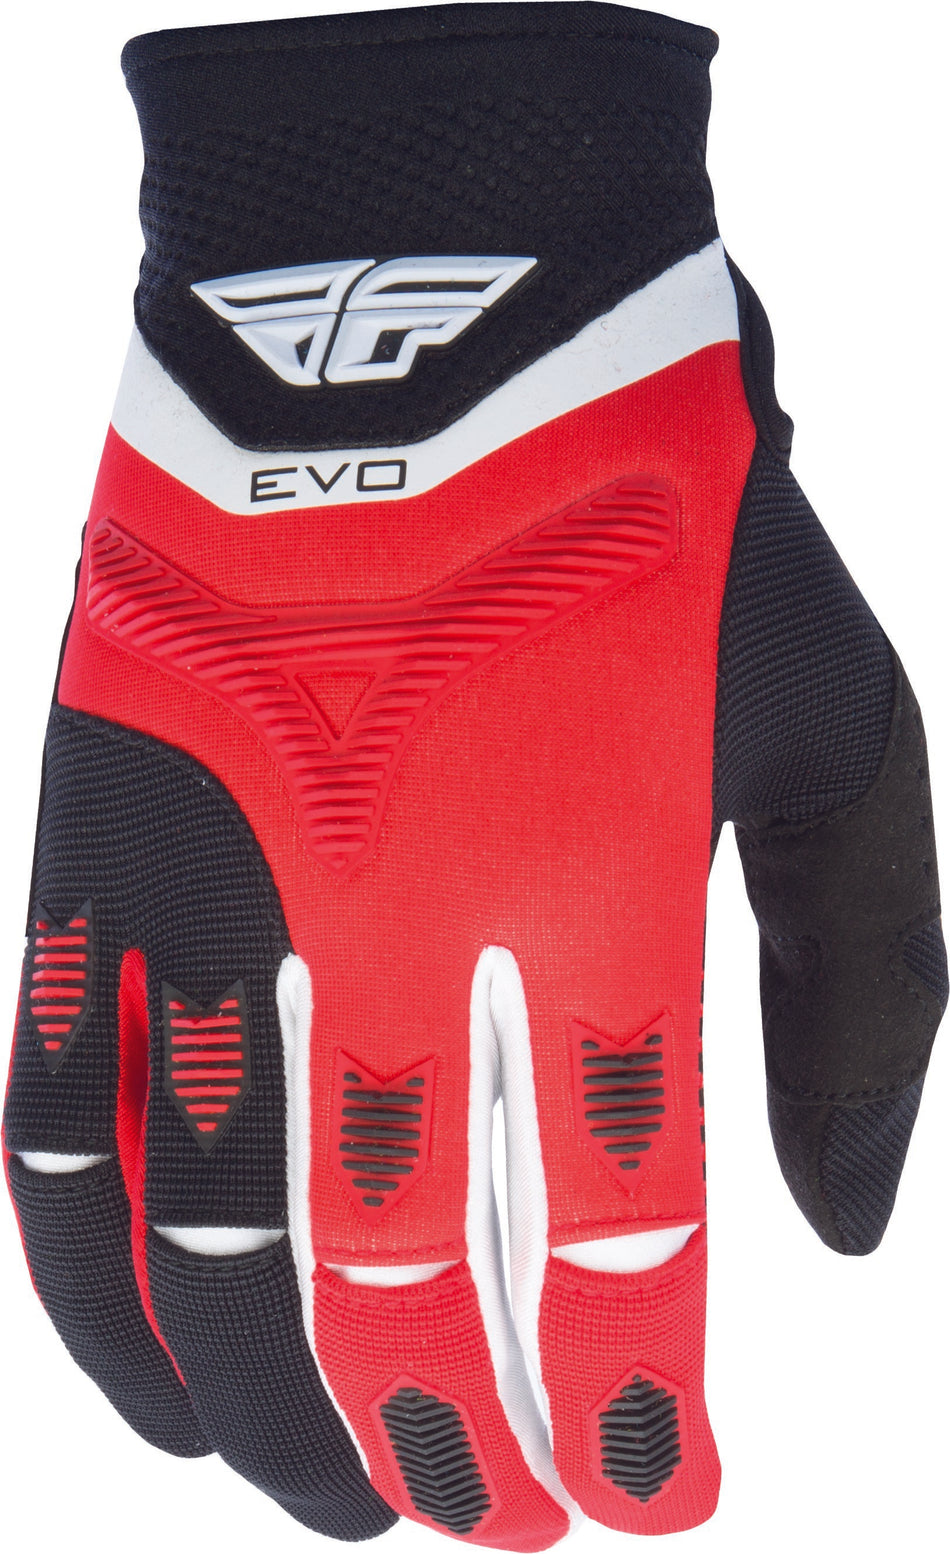 FLY RACING Evo Glove Red/Black S 370-11208